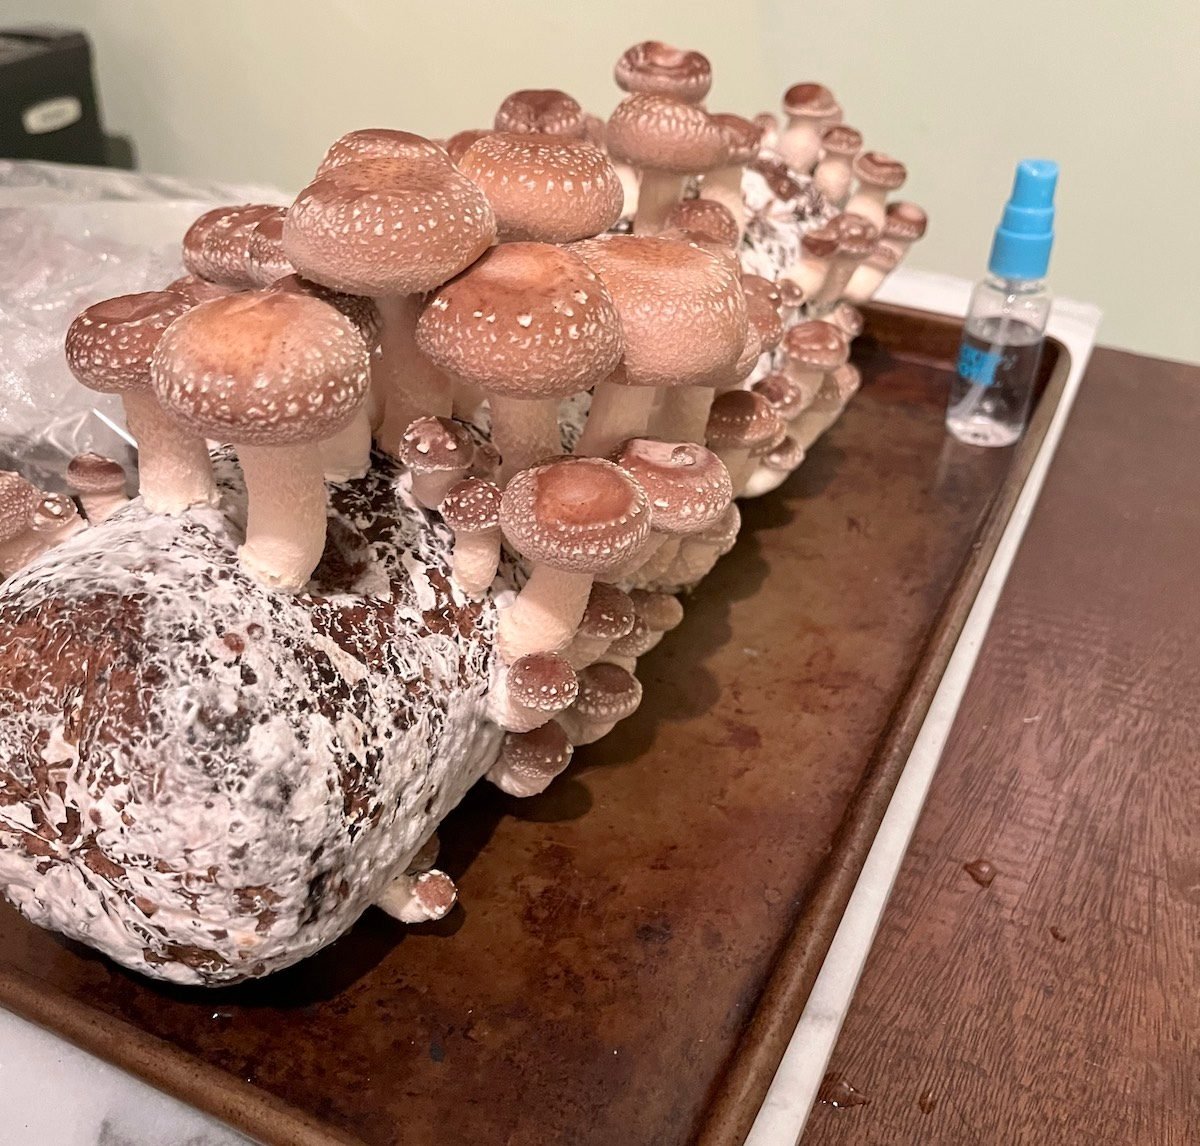 I Tried Growing a Shiitake Mushroom Kit—Here's What Happened